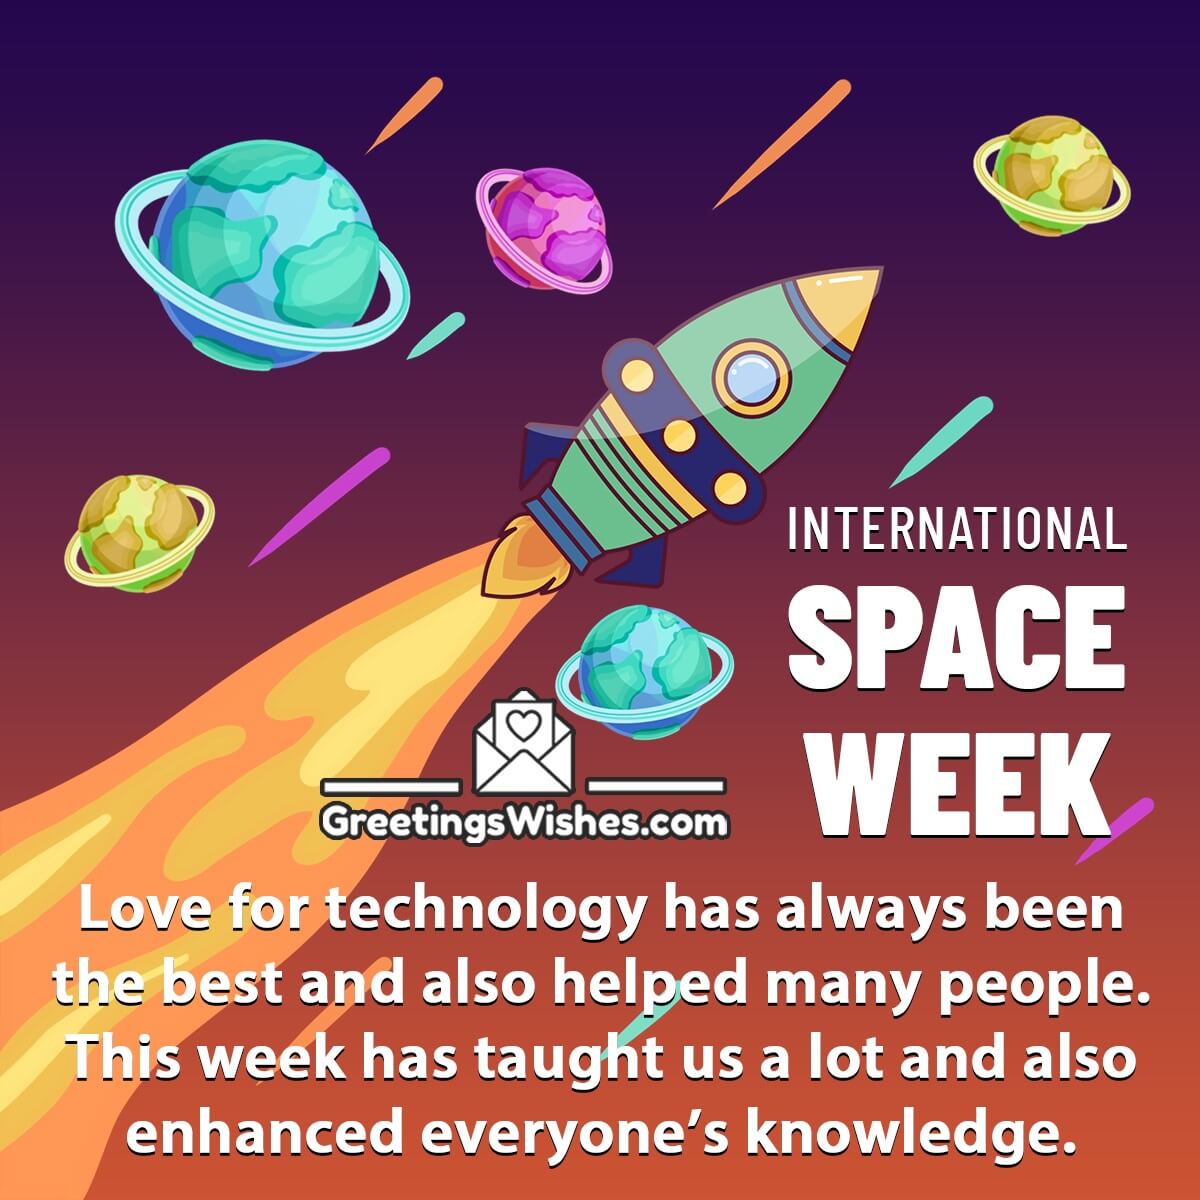 International Space Week Messages